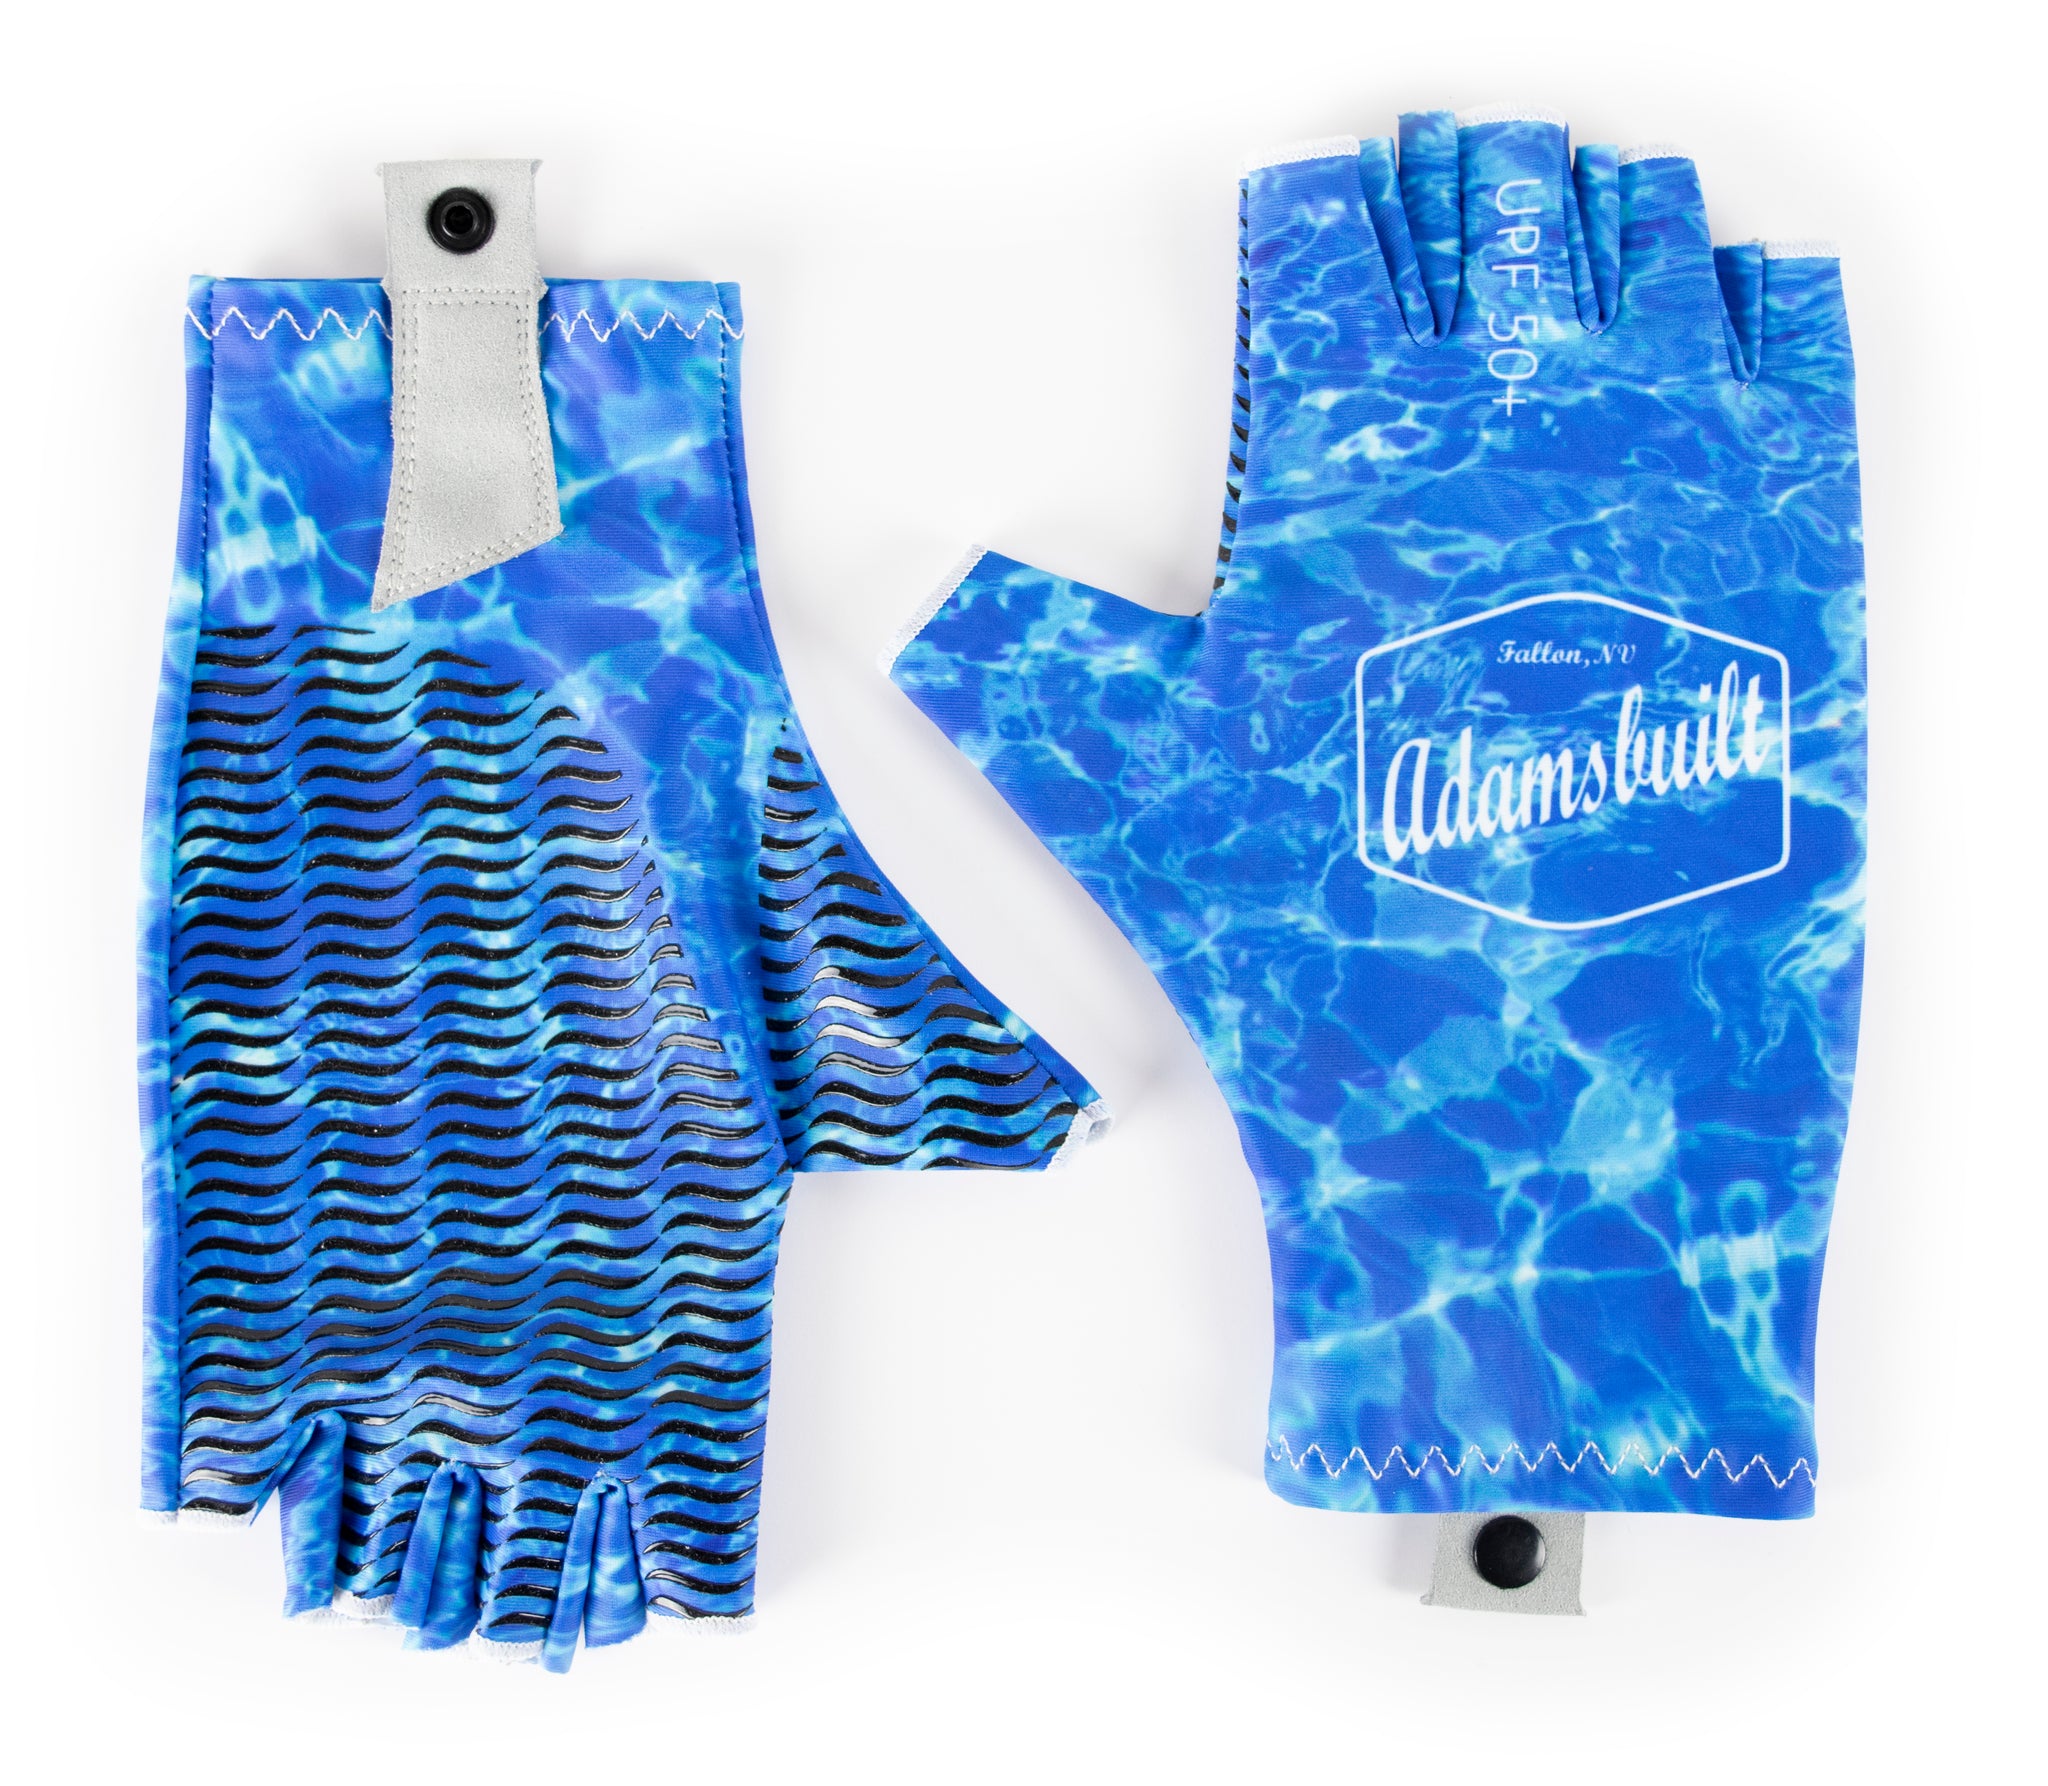 Adamsbuilt Sun Protection Sun Gloves, Large/X-Large